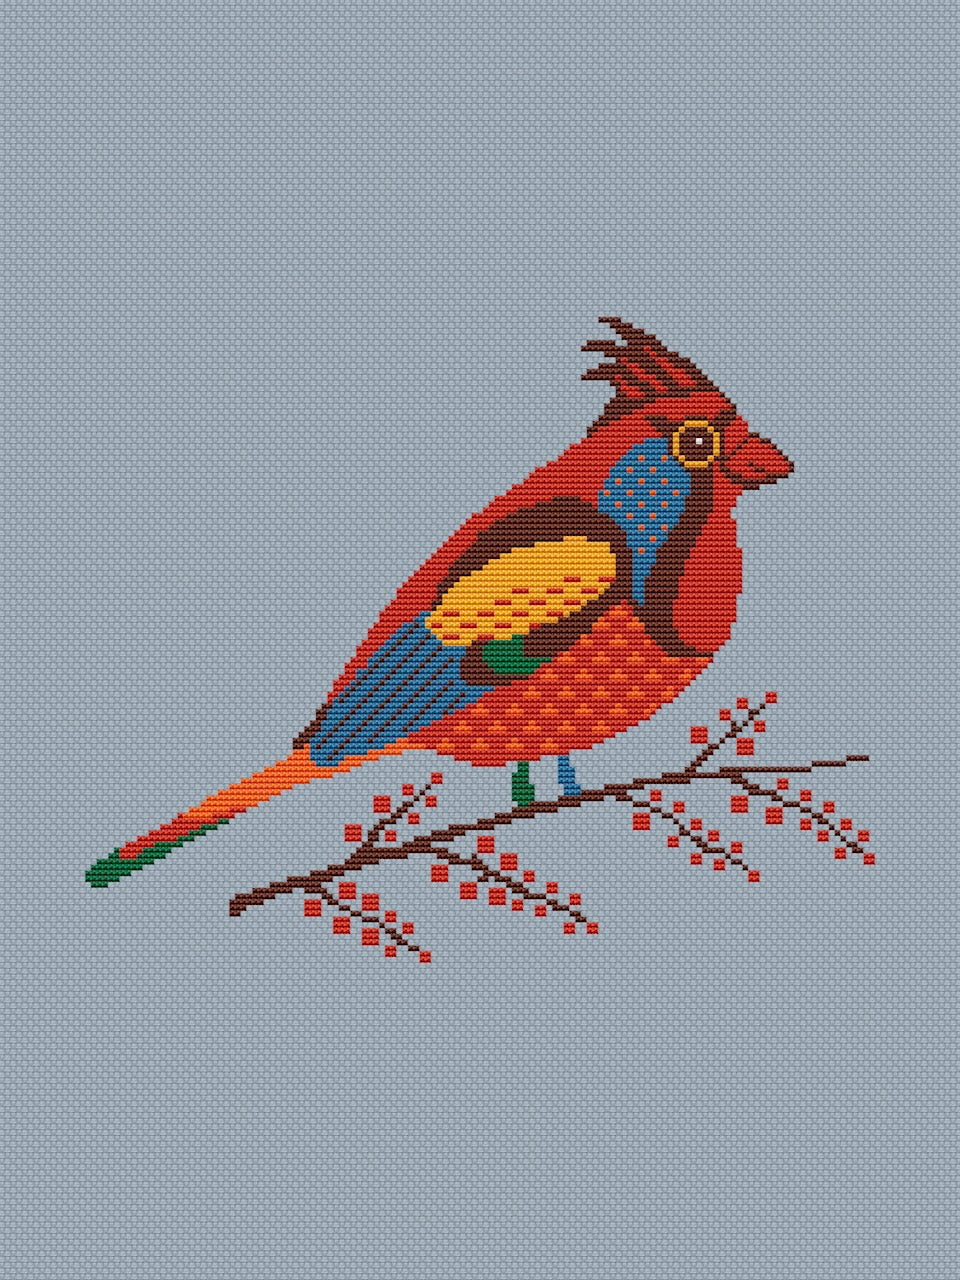 red bird cross stitch 